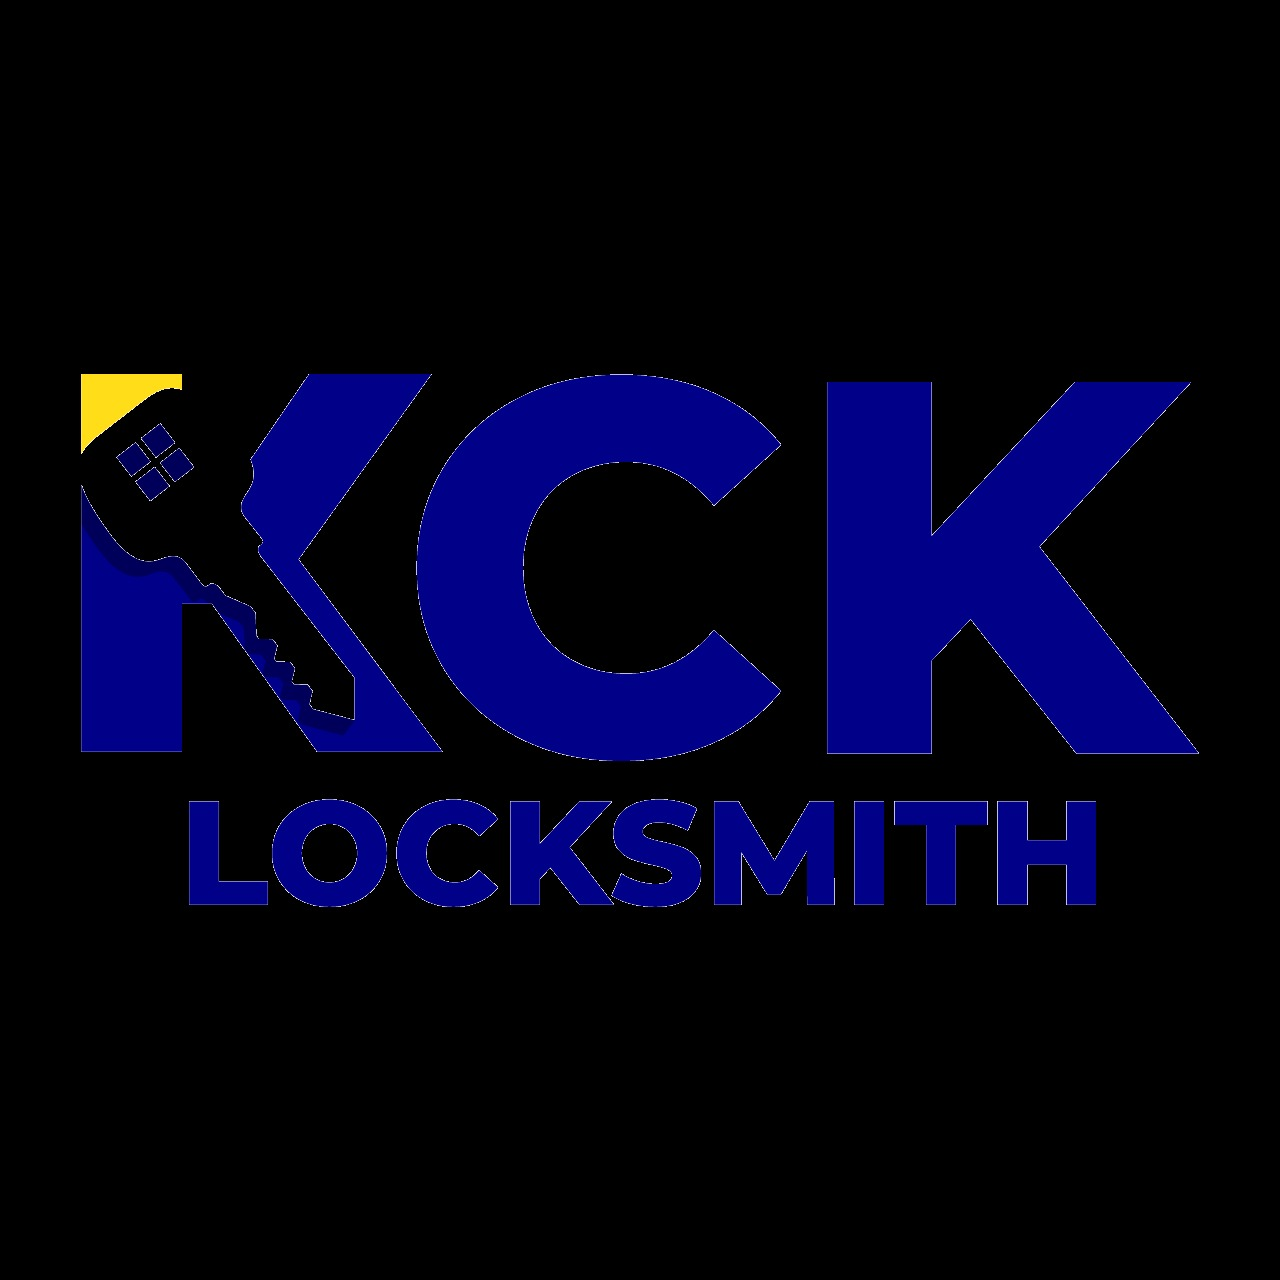 JM Locksmith Services